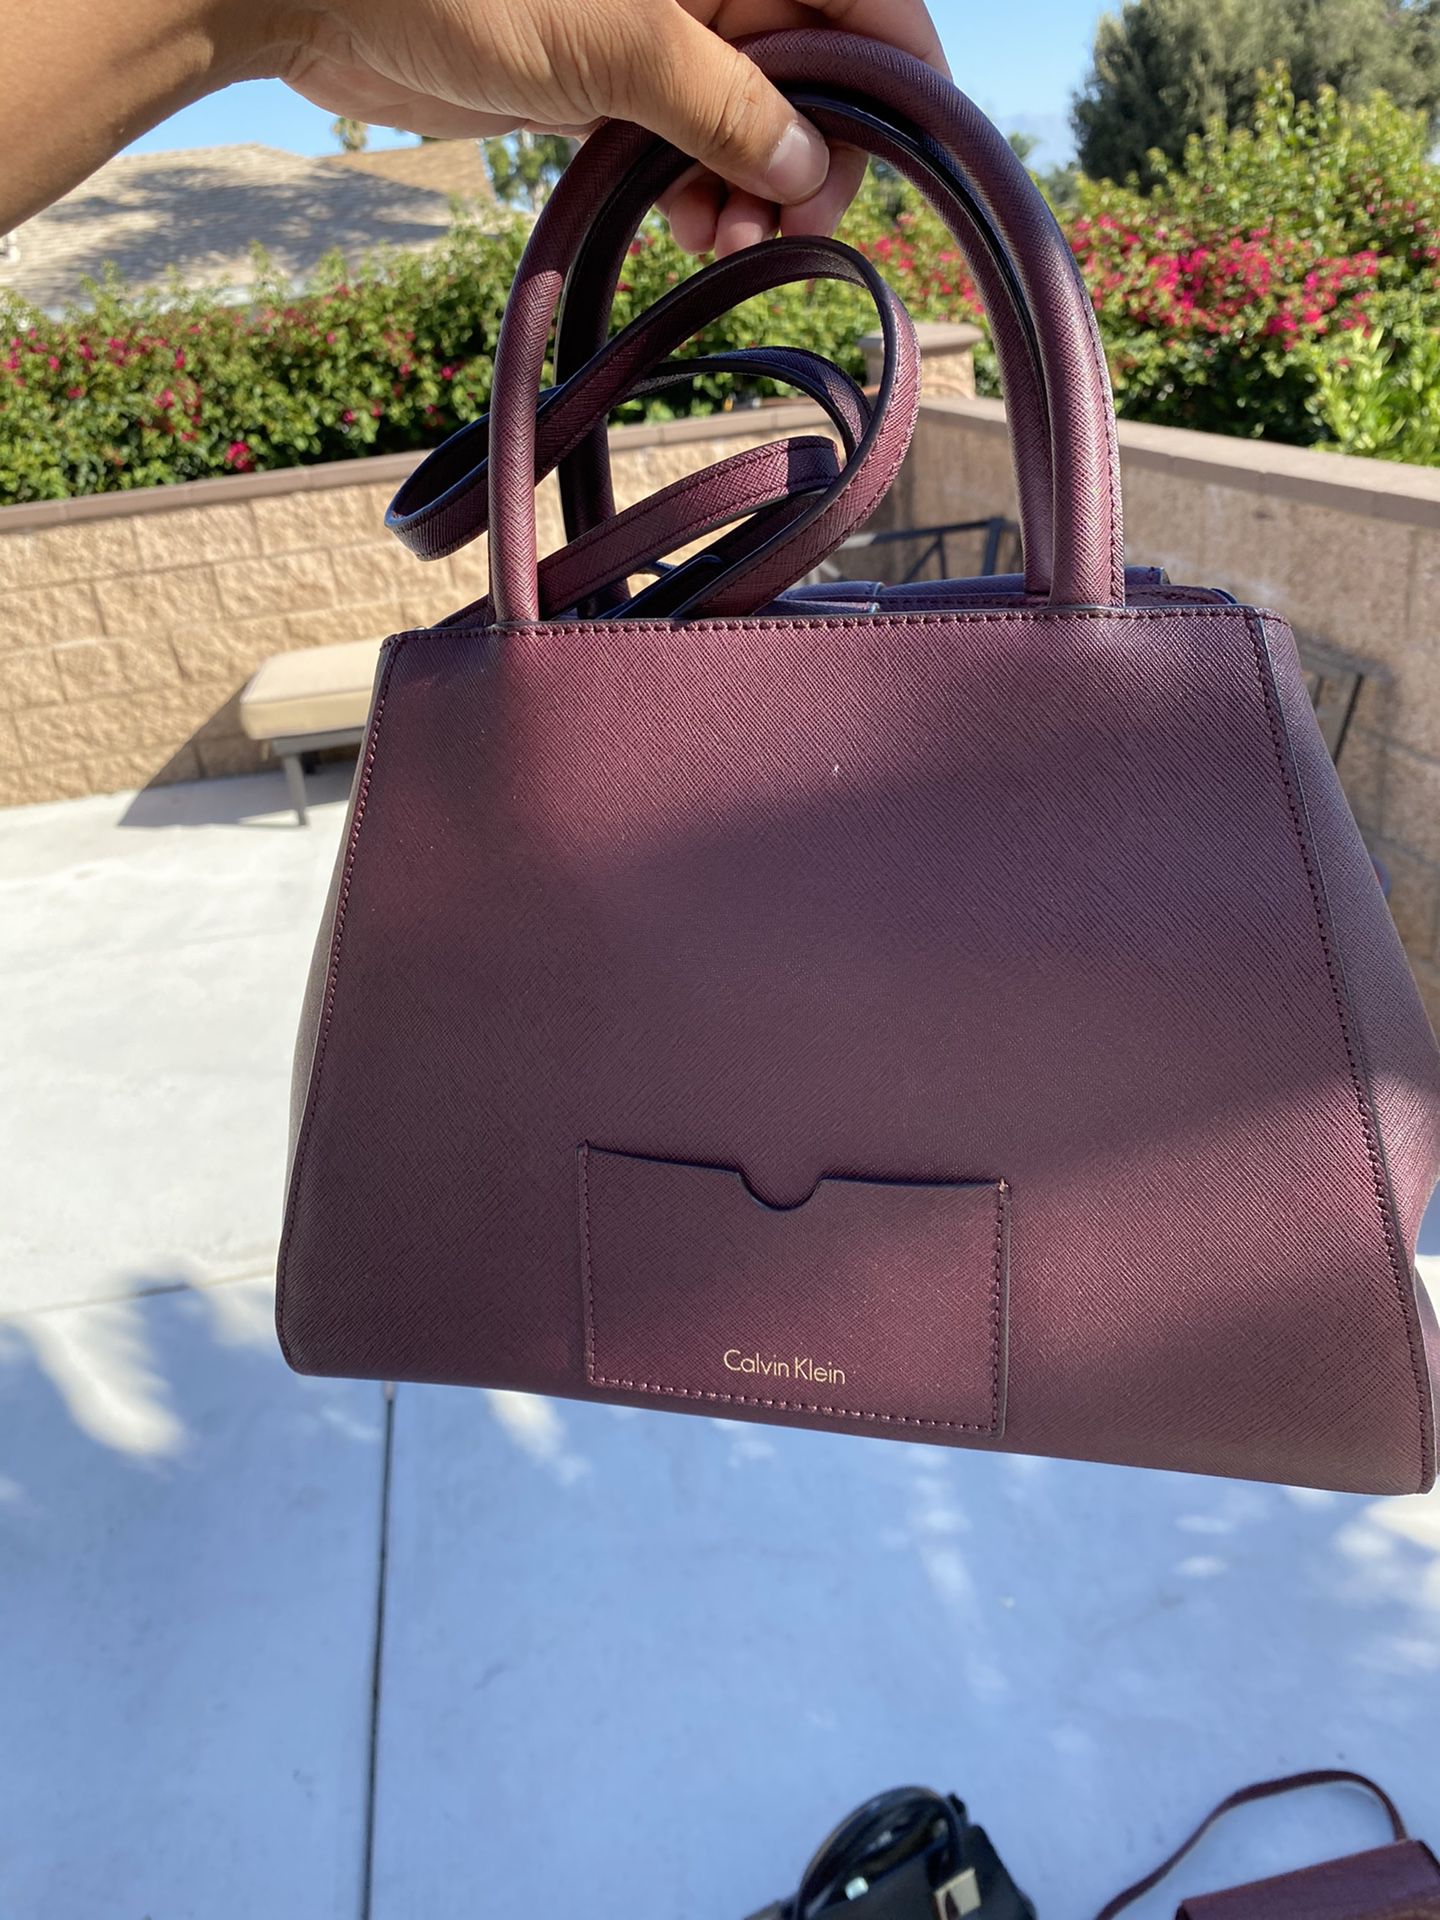 Calvin Klein Womens Shoulder Bag for Sale in Riverside, CA - OfferUp